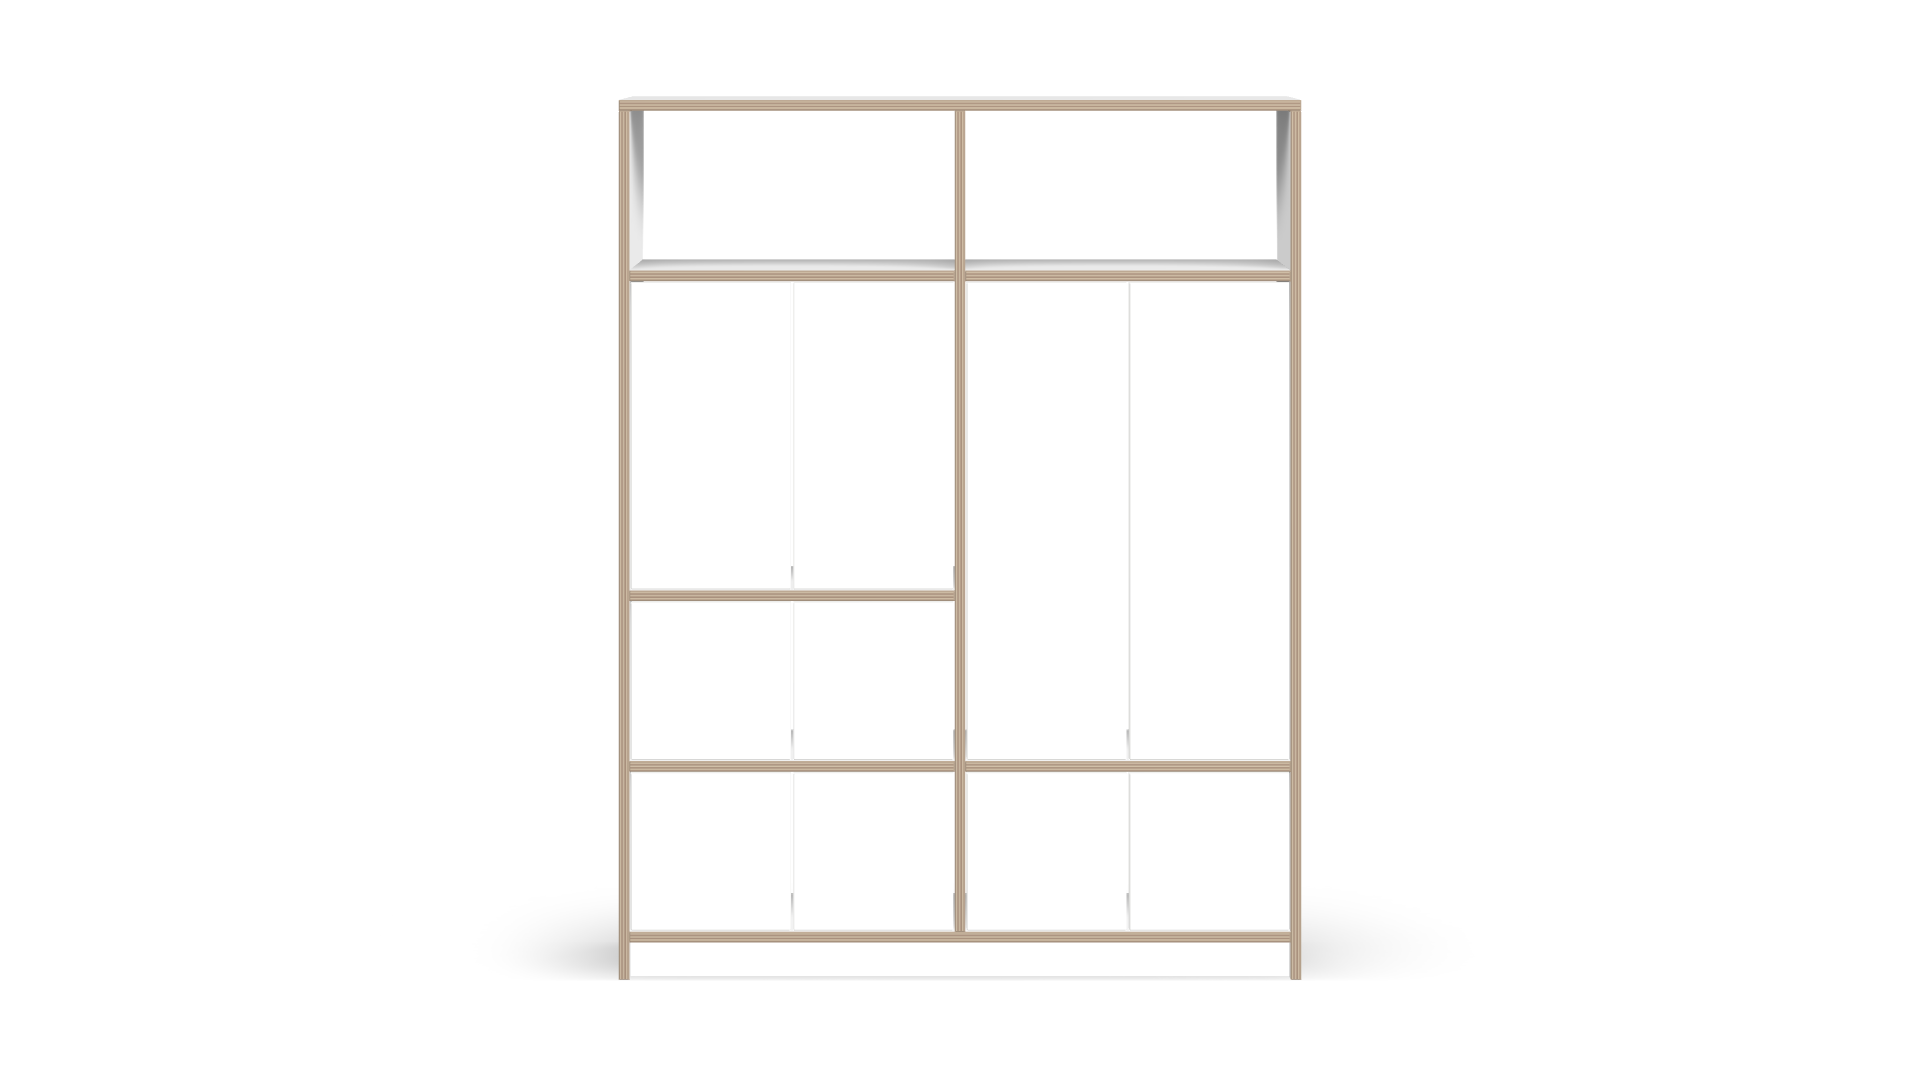 Shelf unit with doors